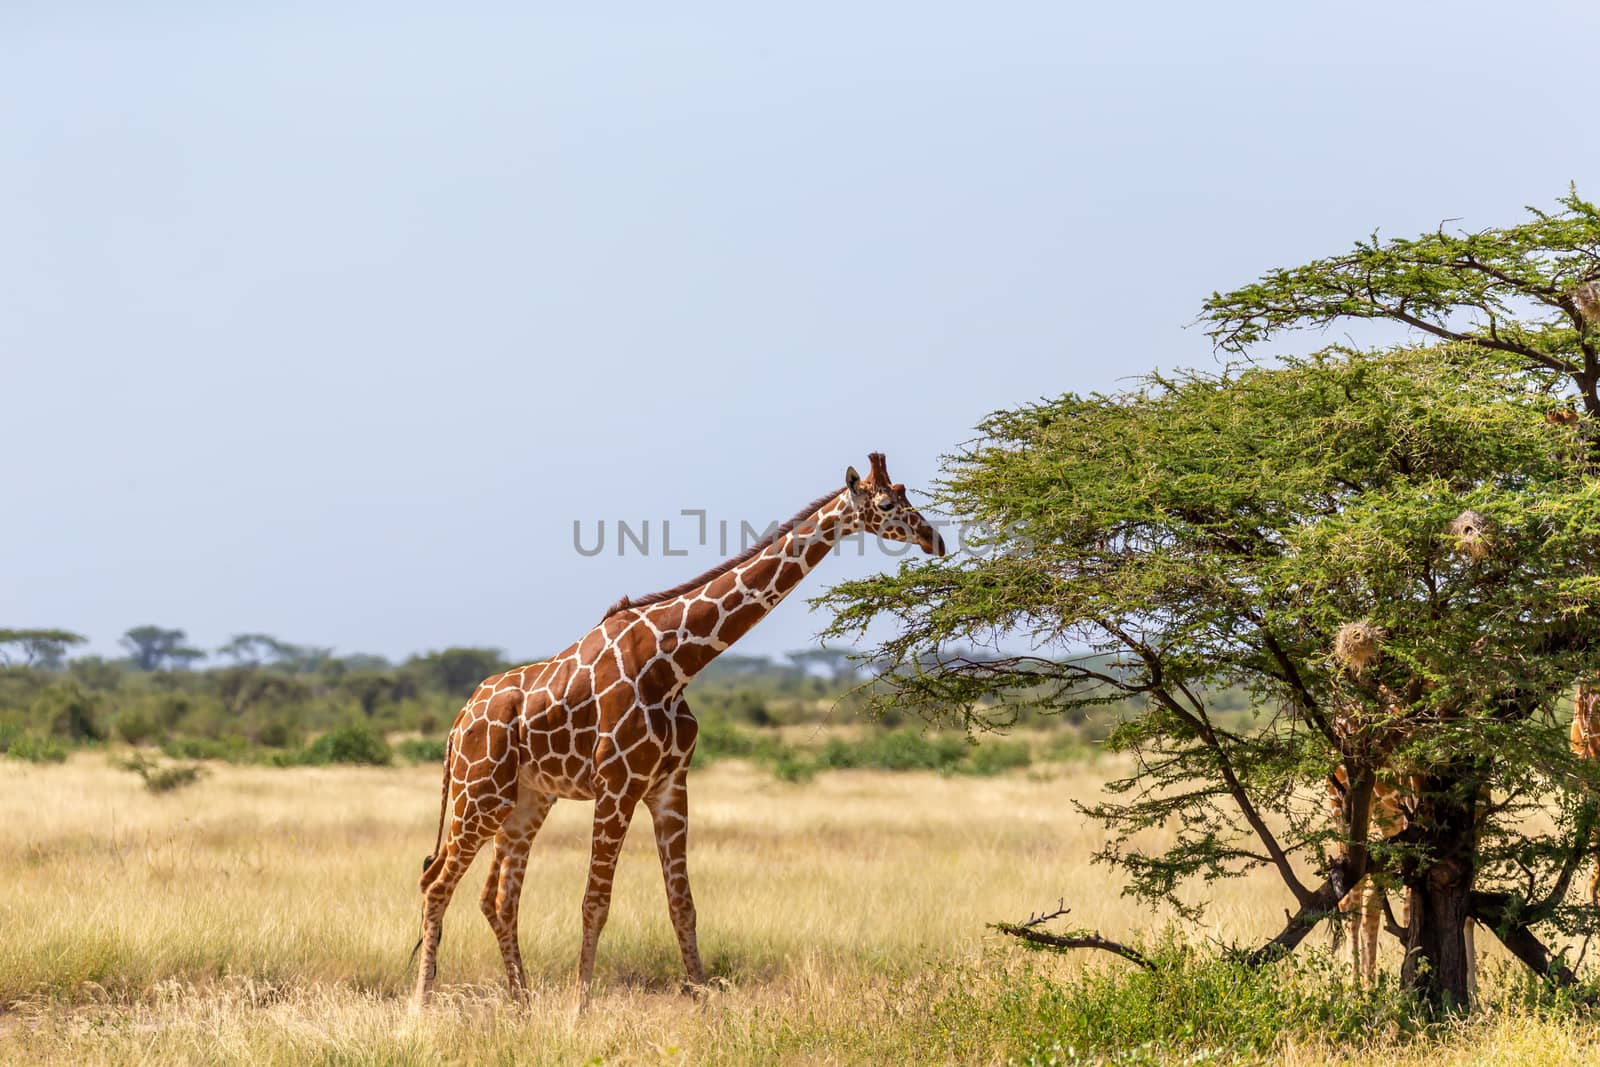 Somalia giraffes eat the leaves of acacia trees by 25ehaag6